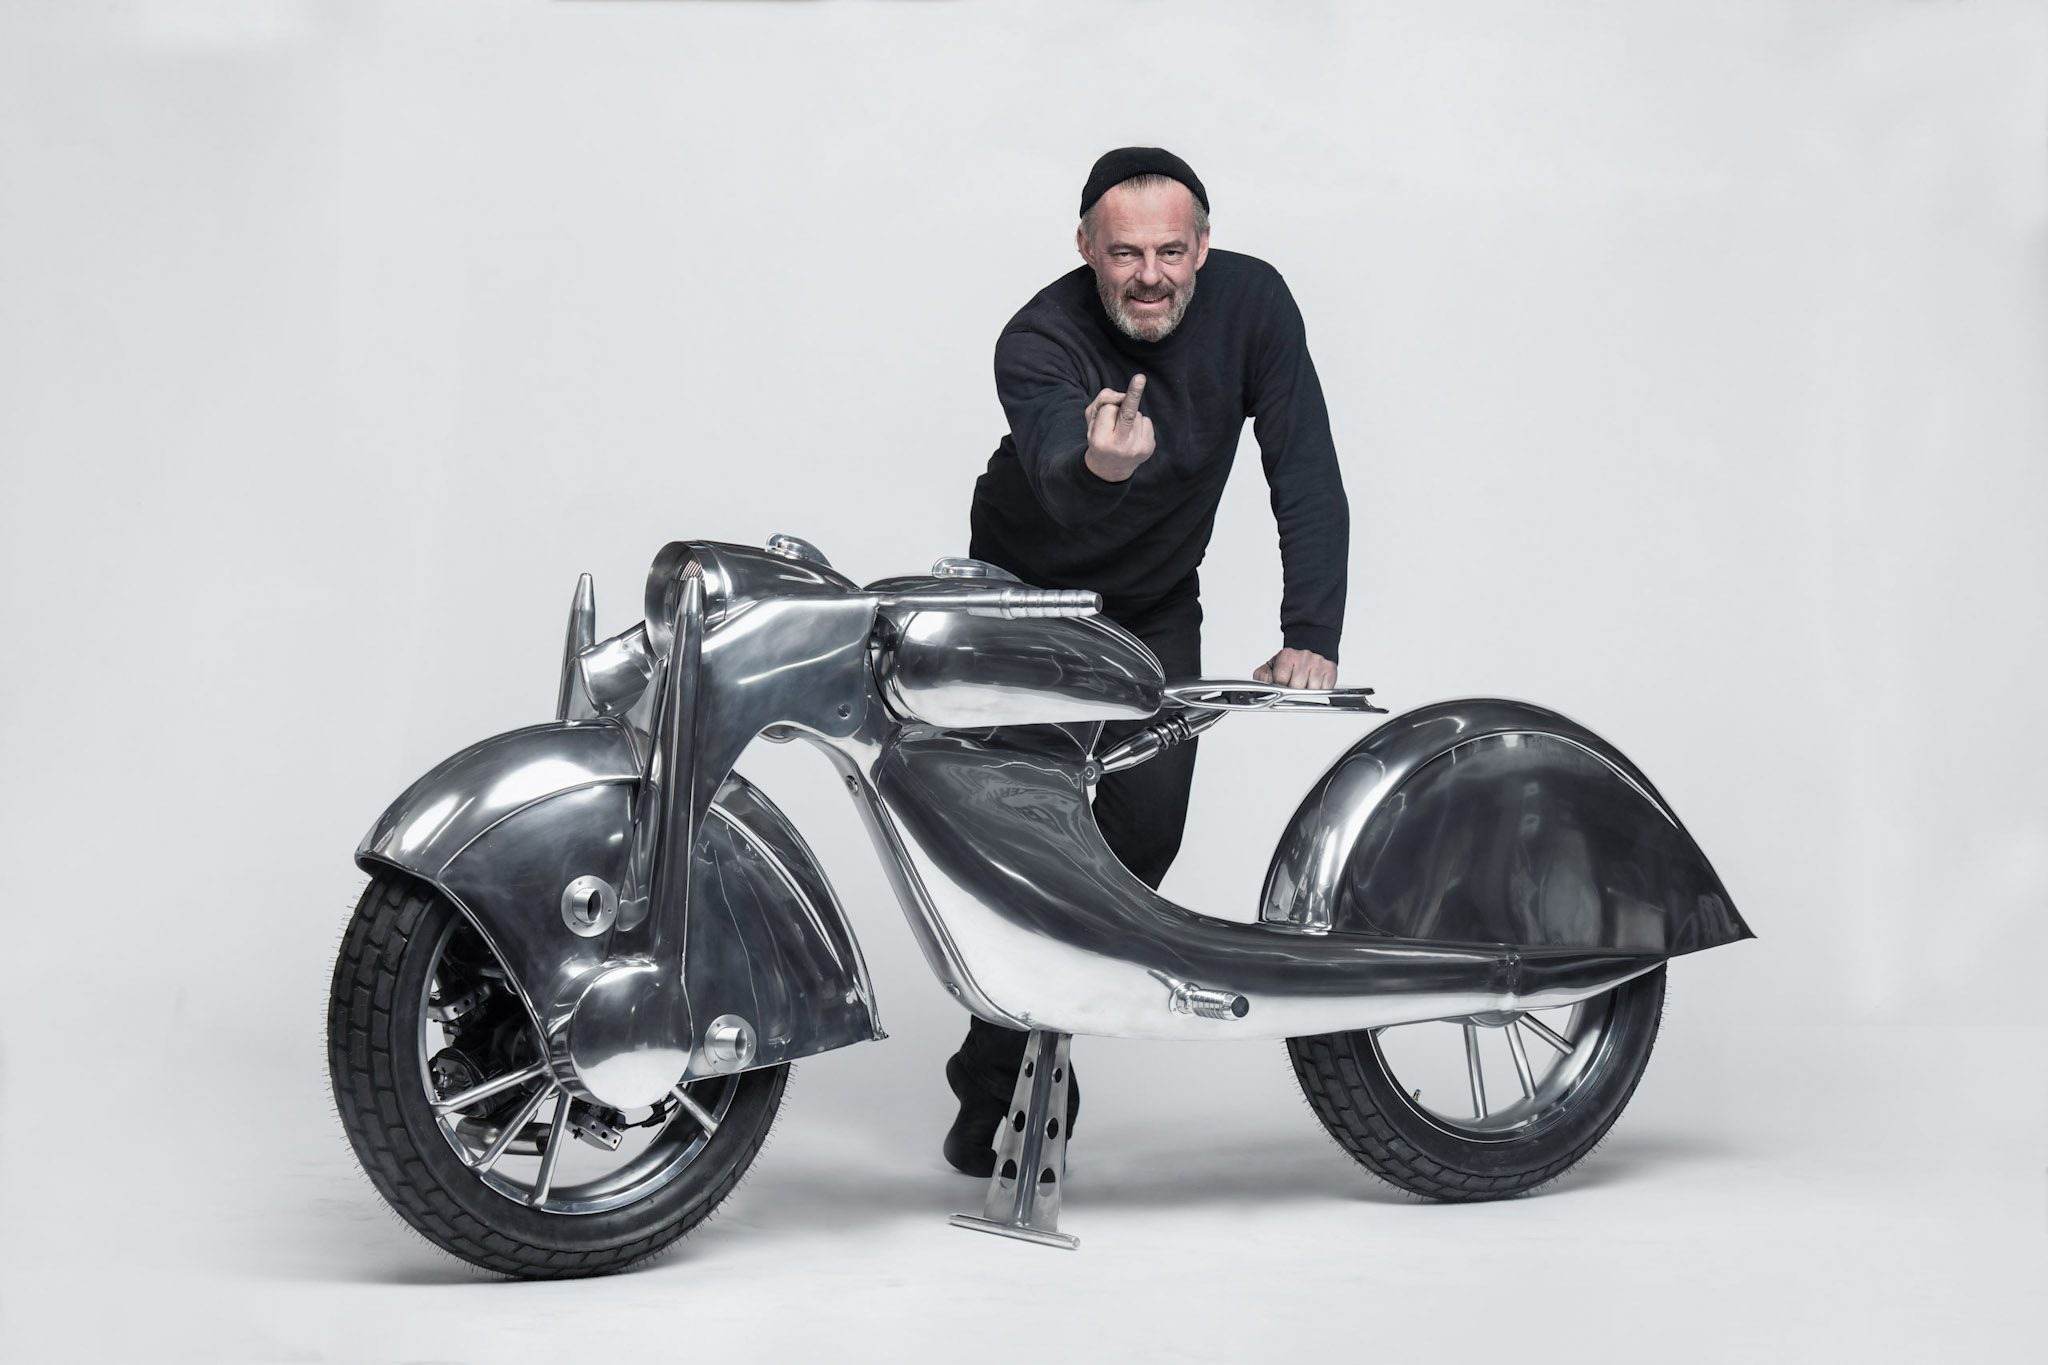 Craig Rodsmith and his engine-wheeled custom bike 'The Killer'.